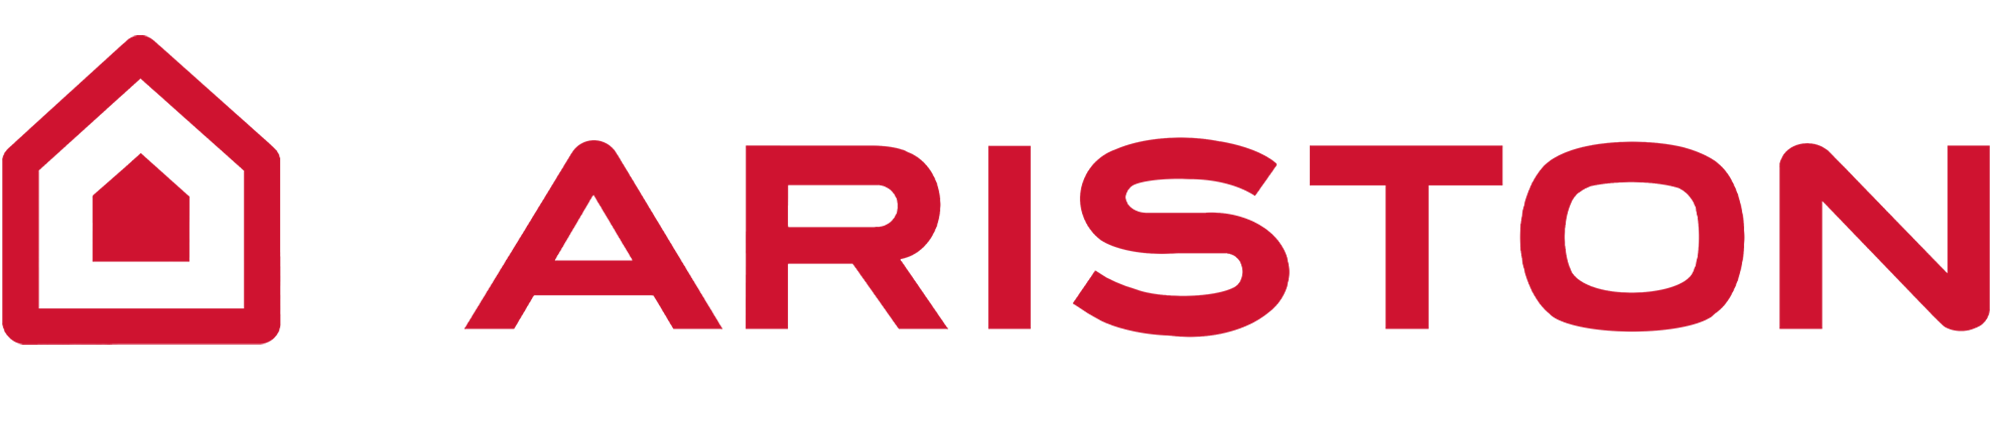 Ariston фирма. Ariston Thermo Group logo. Аристон котлы логотип. Ariston котел лого. Арис лого.